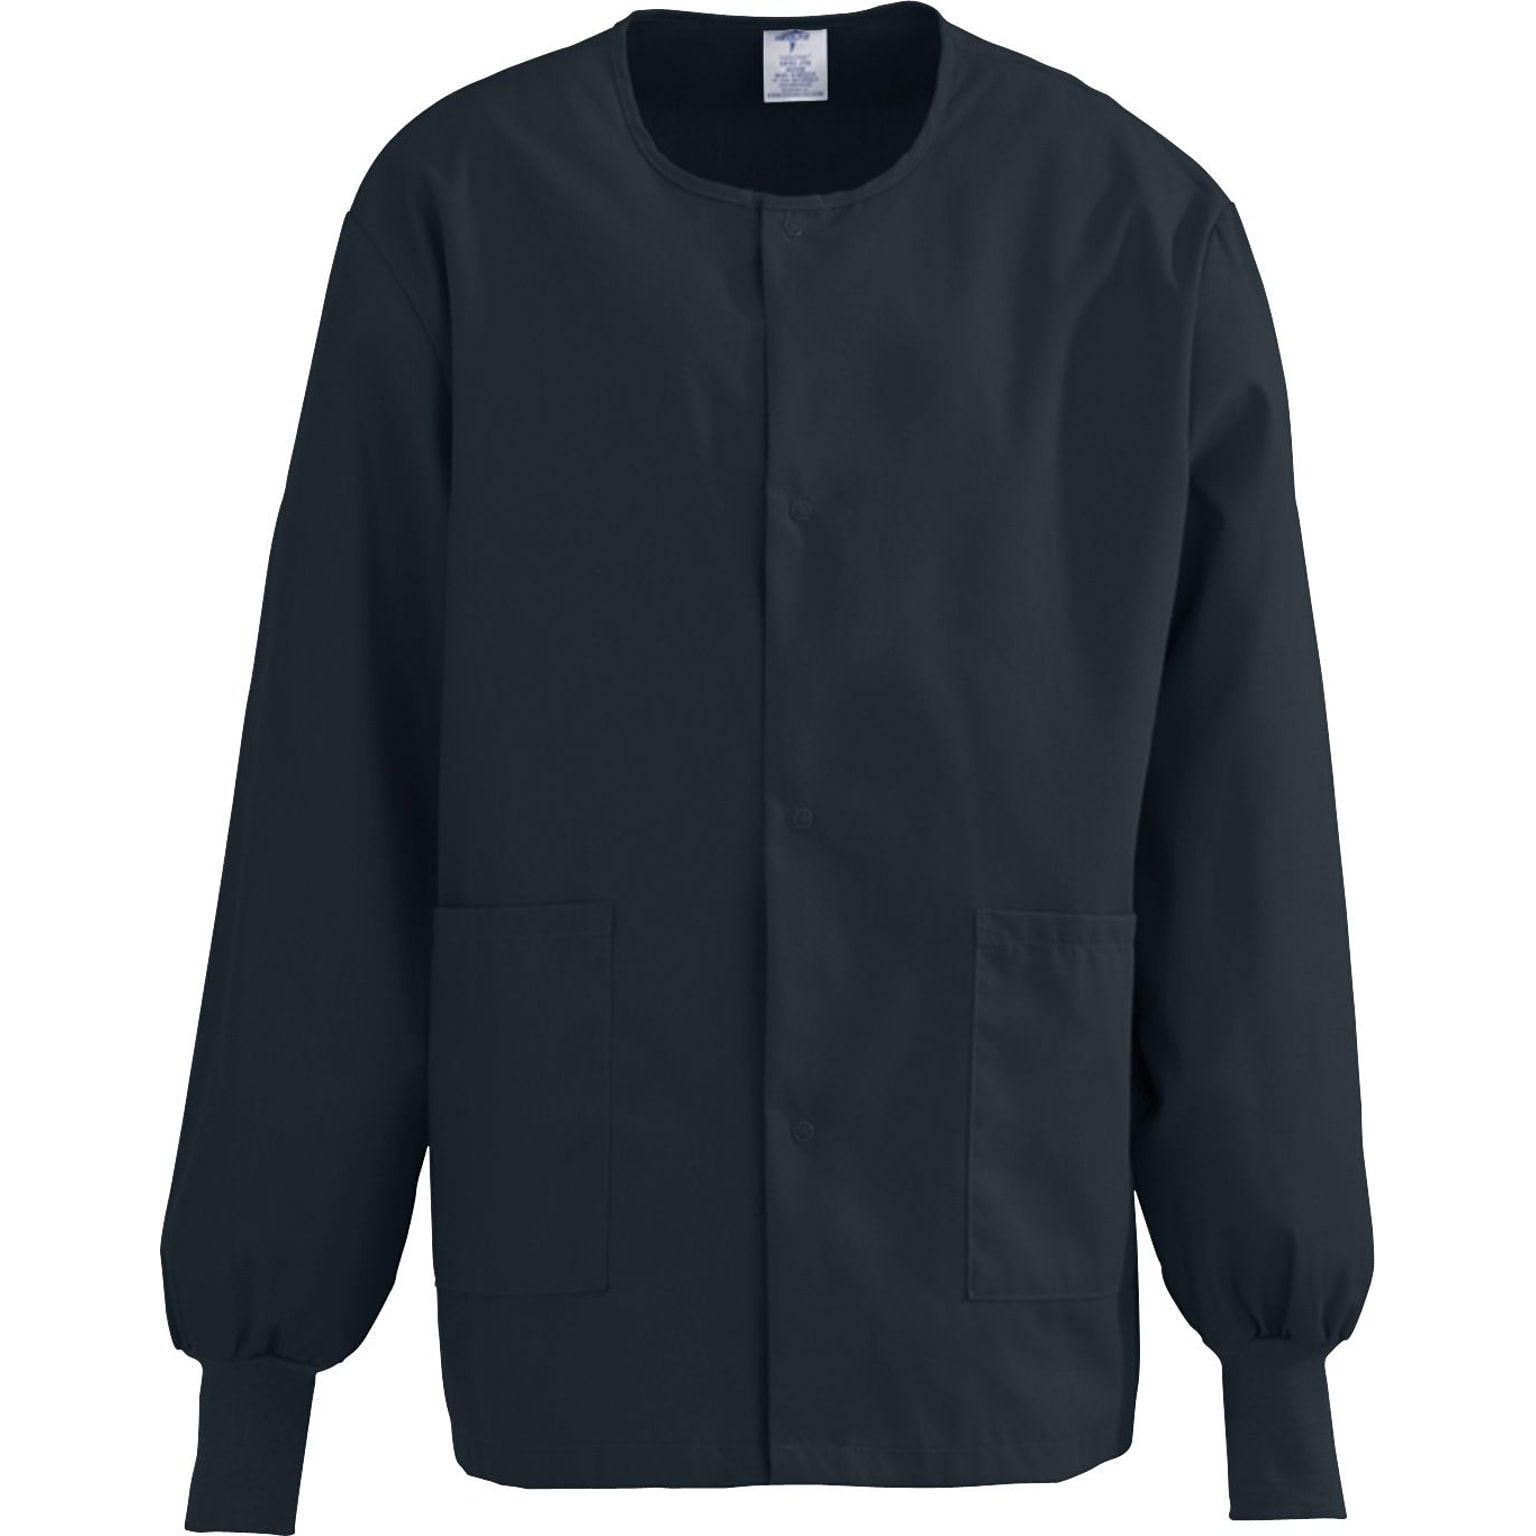 Medline ComfortEase Unisex Two-pockets Warm-up Scrub Jackets, Black, Small